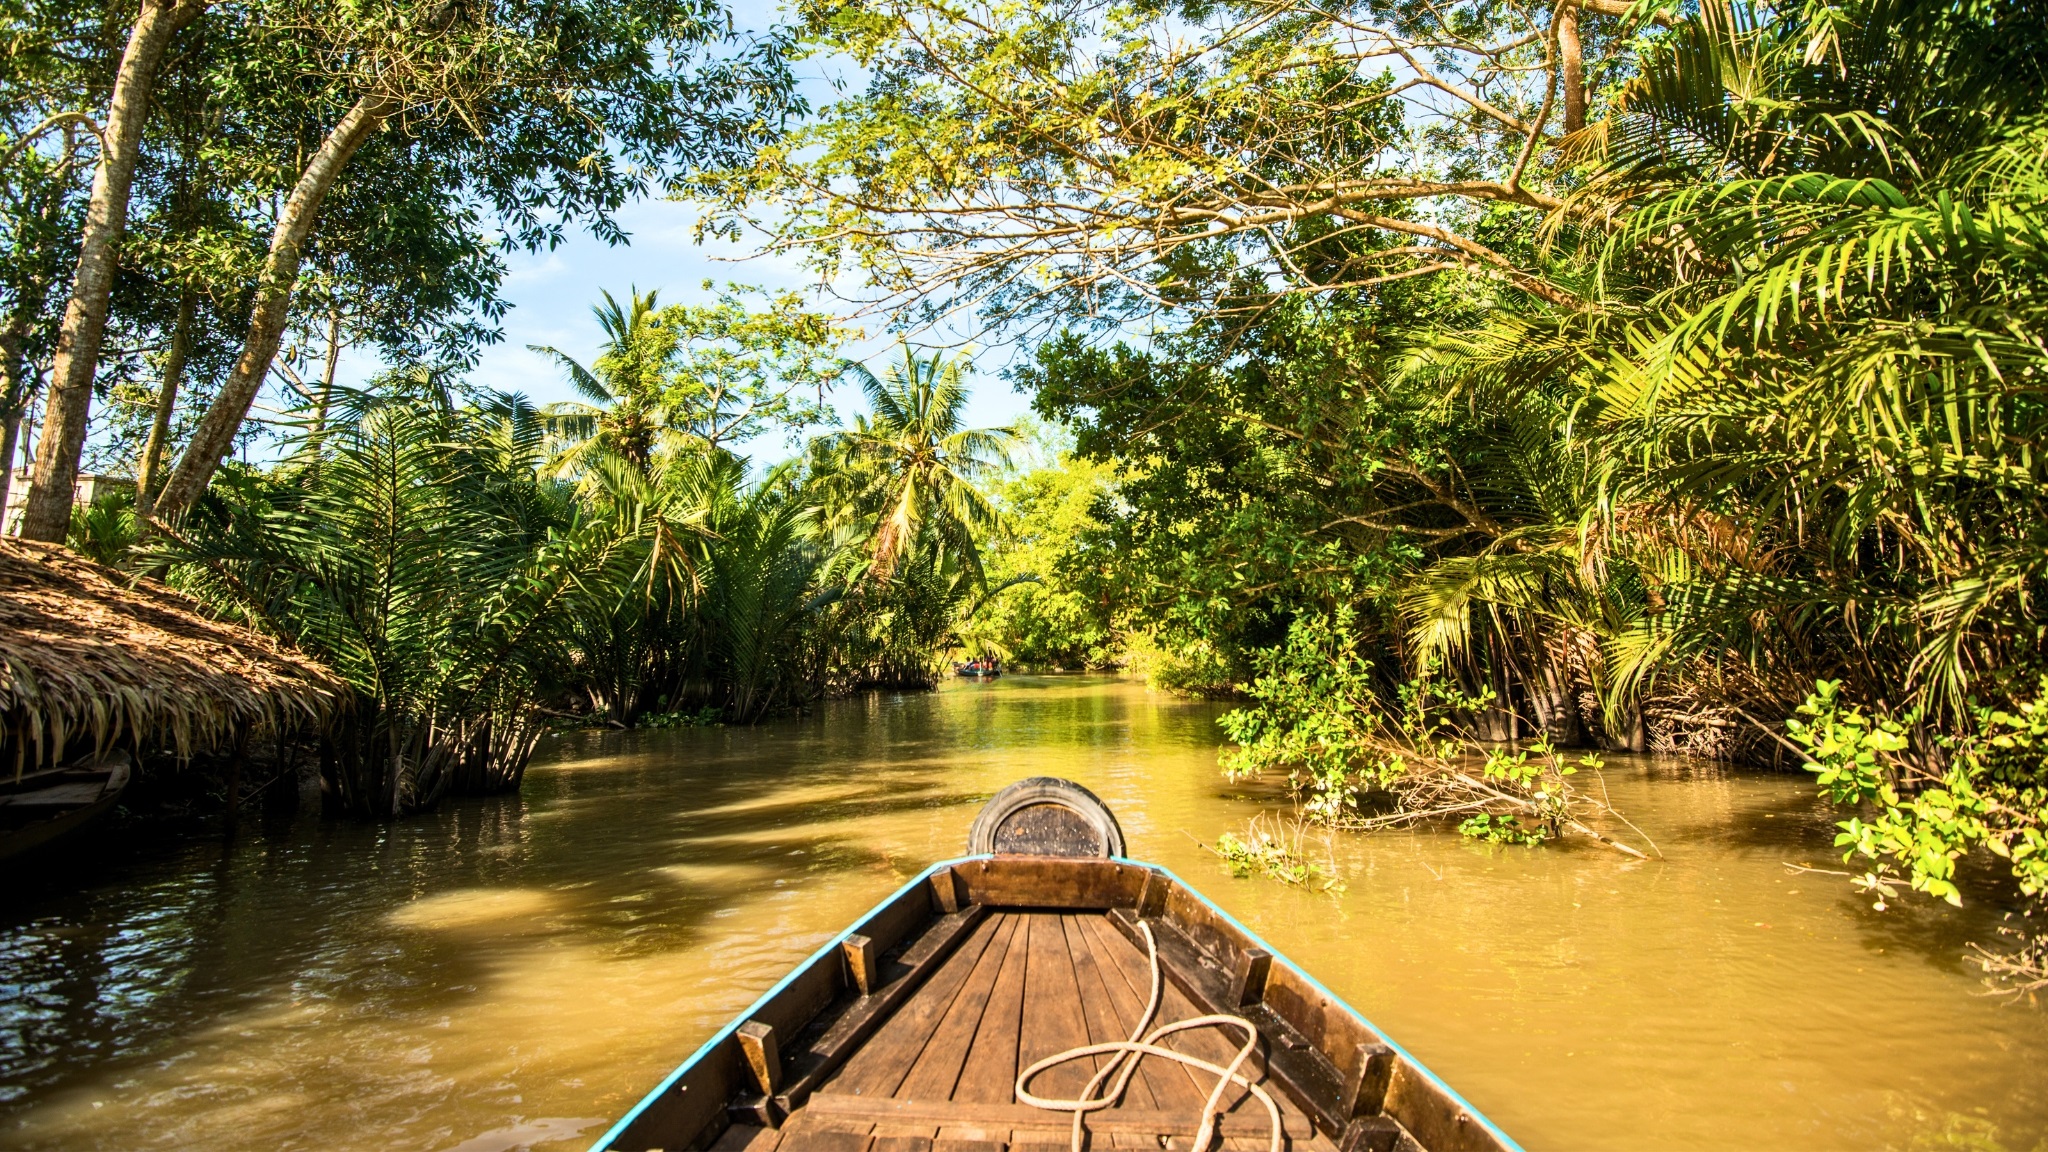 Day 3 Sampan Ride Through A Canal In Mekong Delta